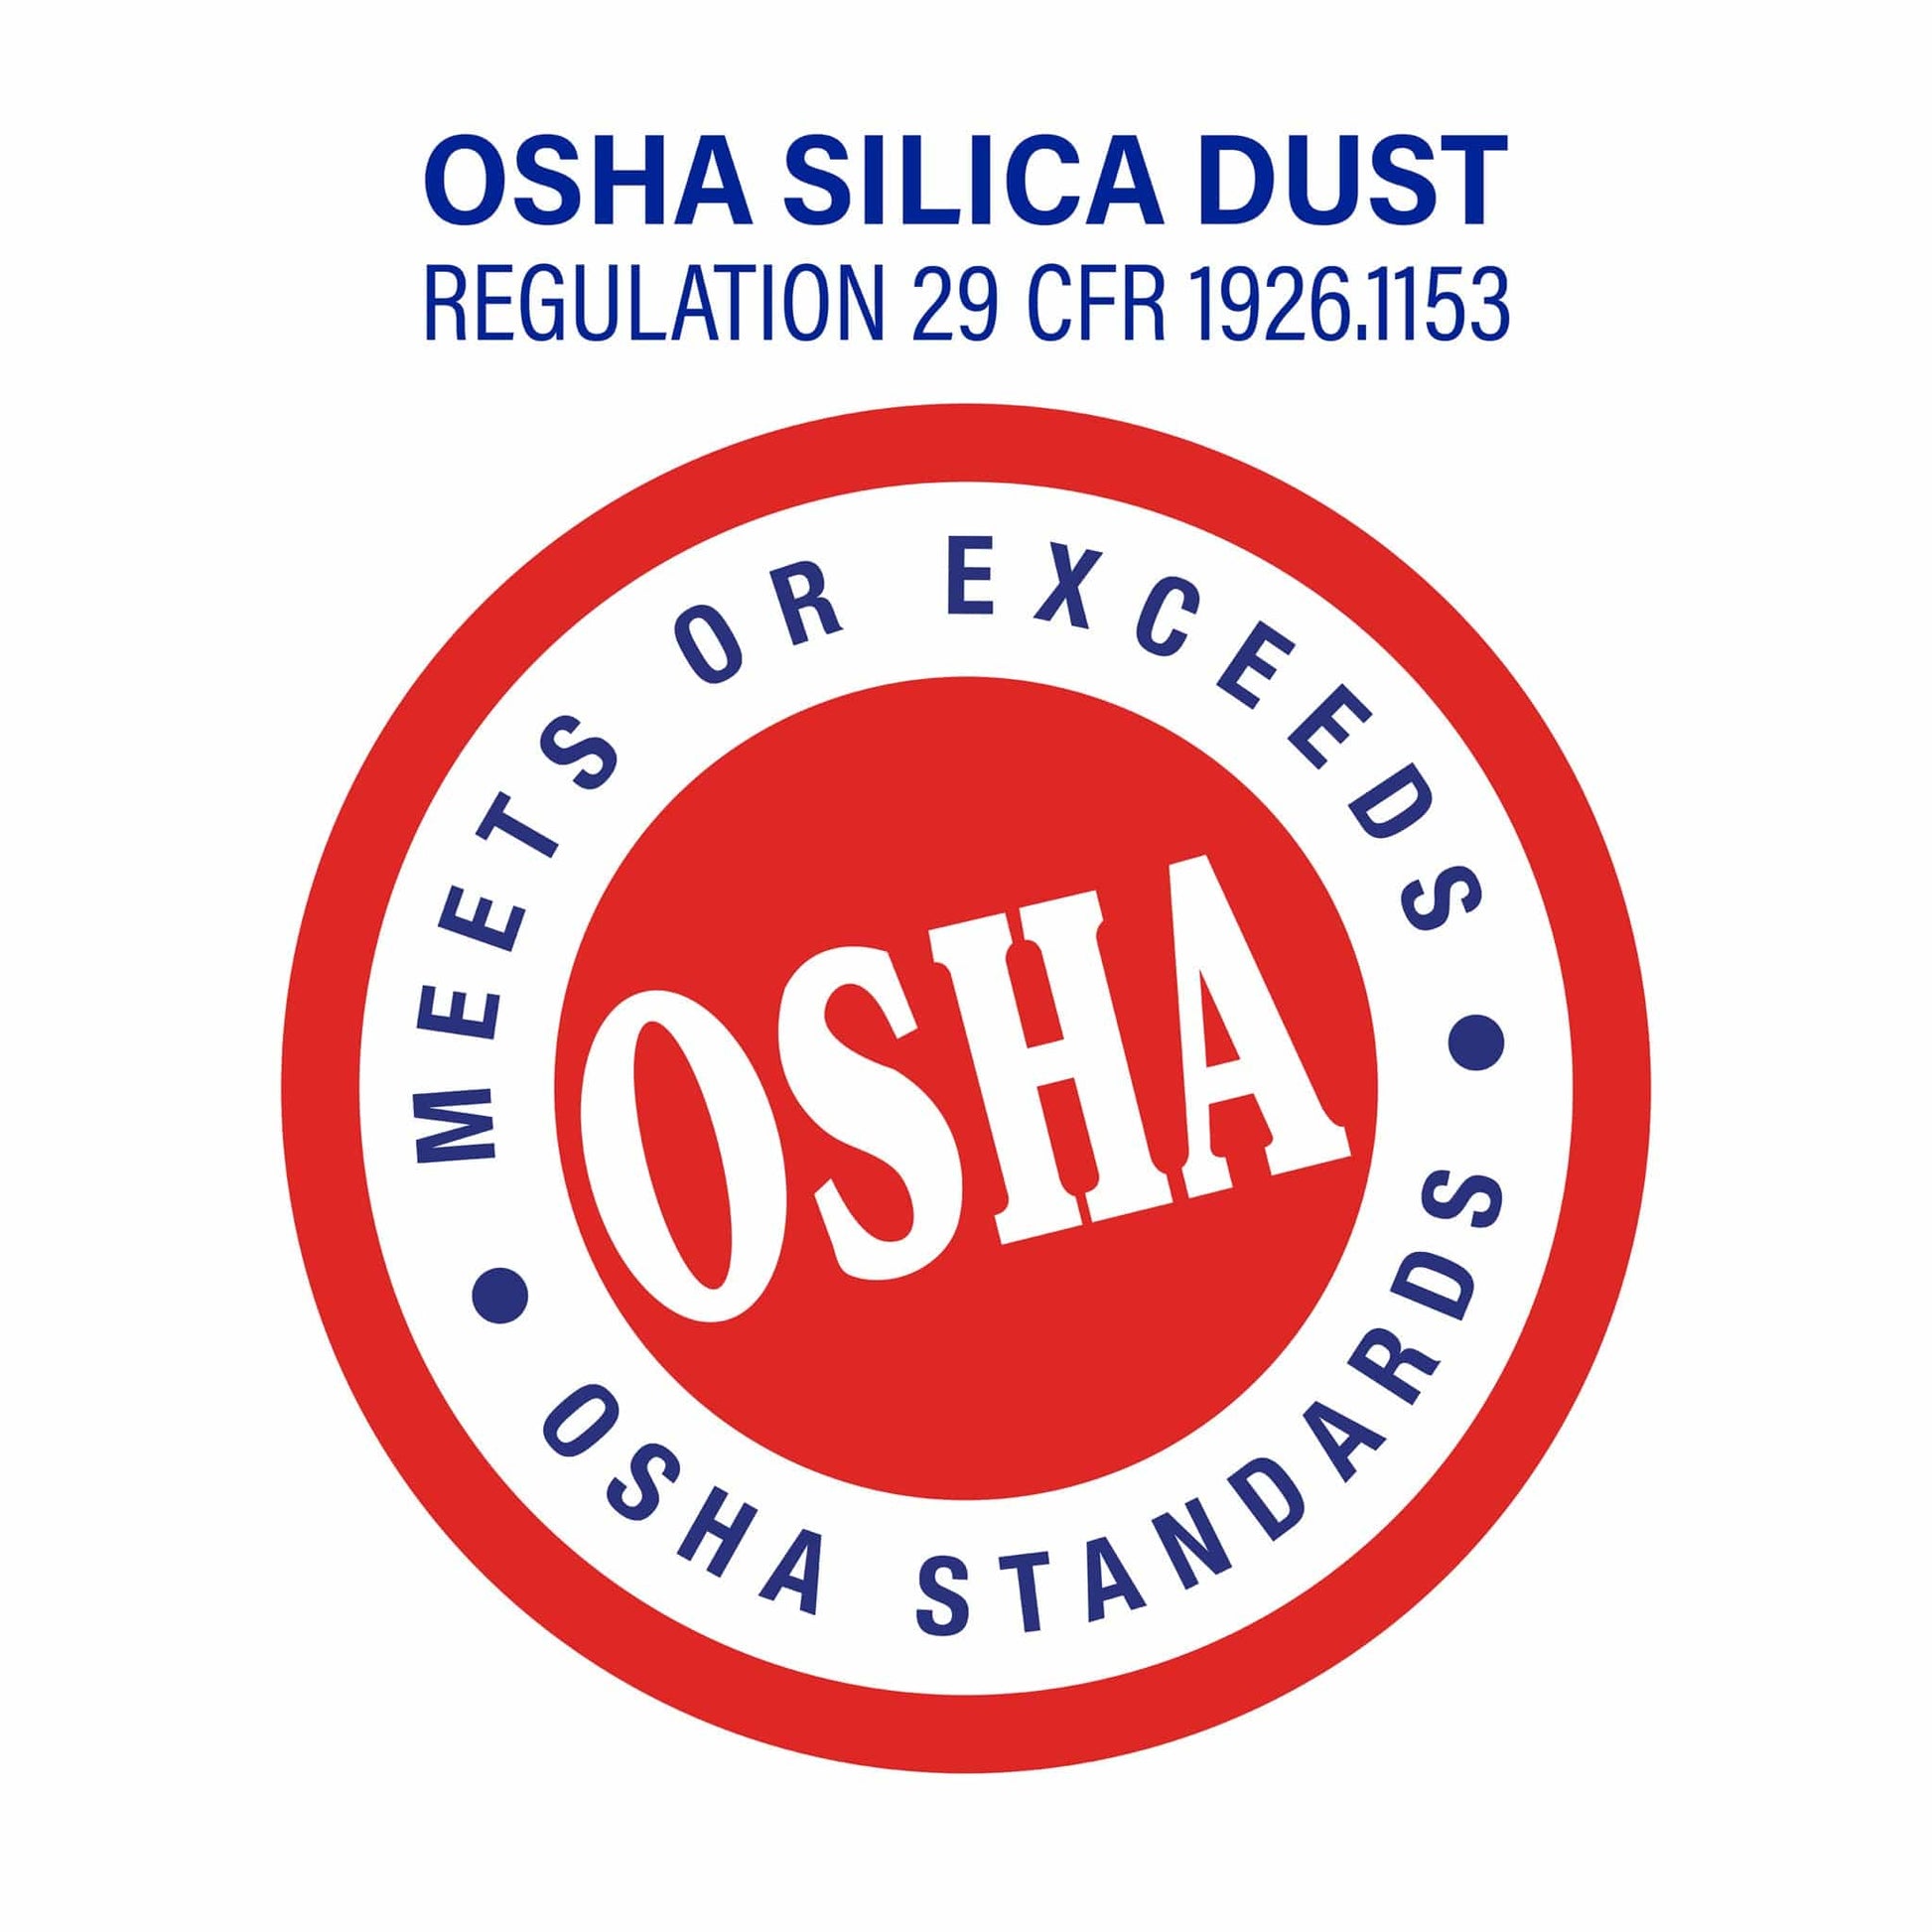 Meets or Exceeds OSHA Silica Dust Regulation 29 CFR 1926.1160